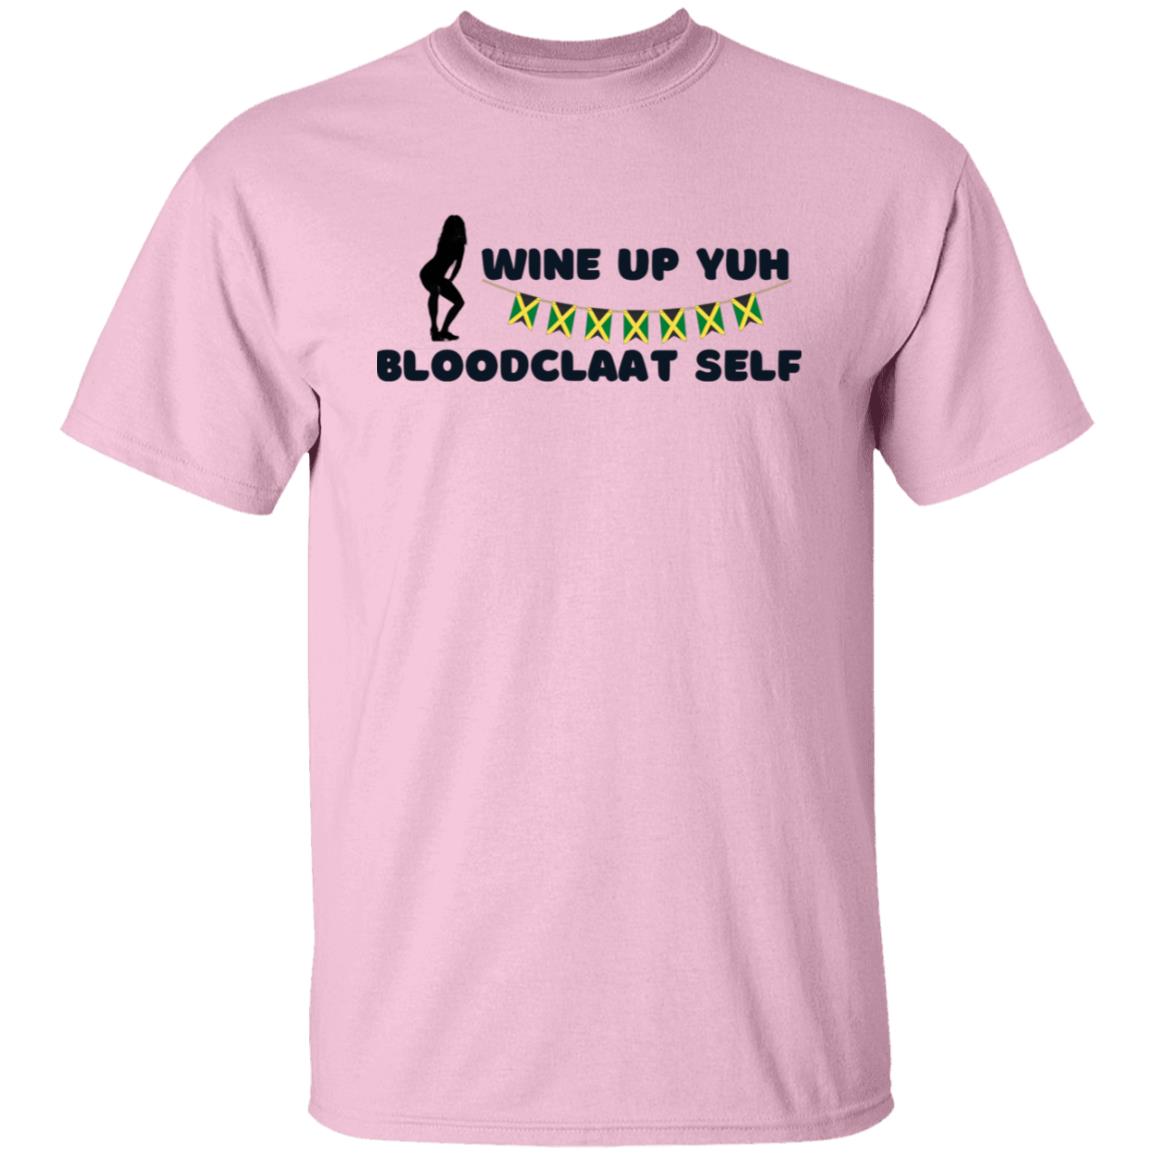 "Wine up yuh self" Jamaican T-Shirt